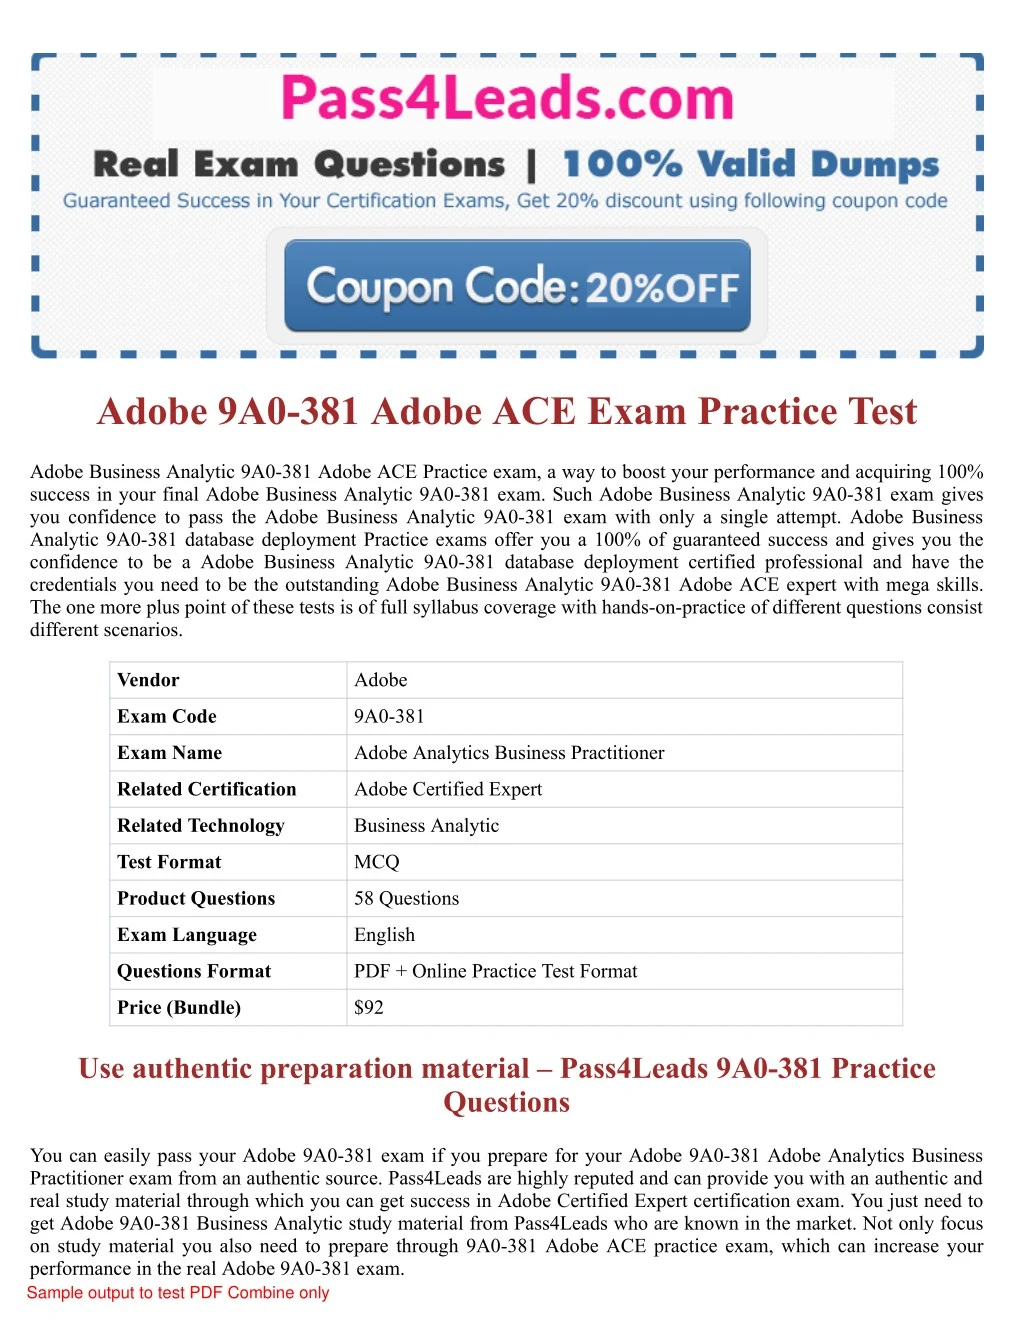 adobe 9a0 381 adobe ace exam practice test